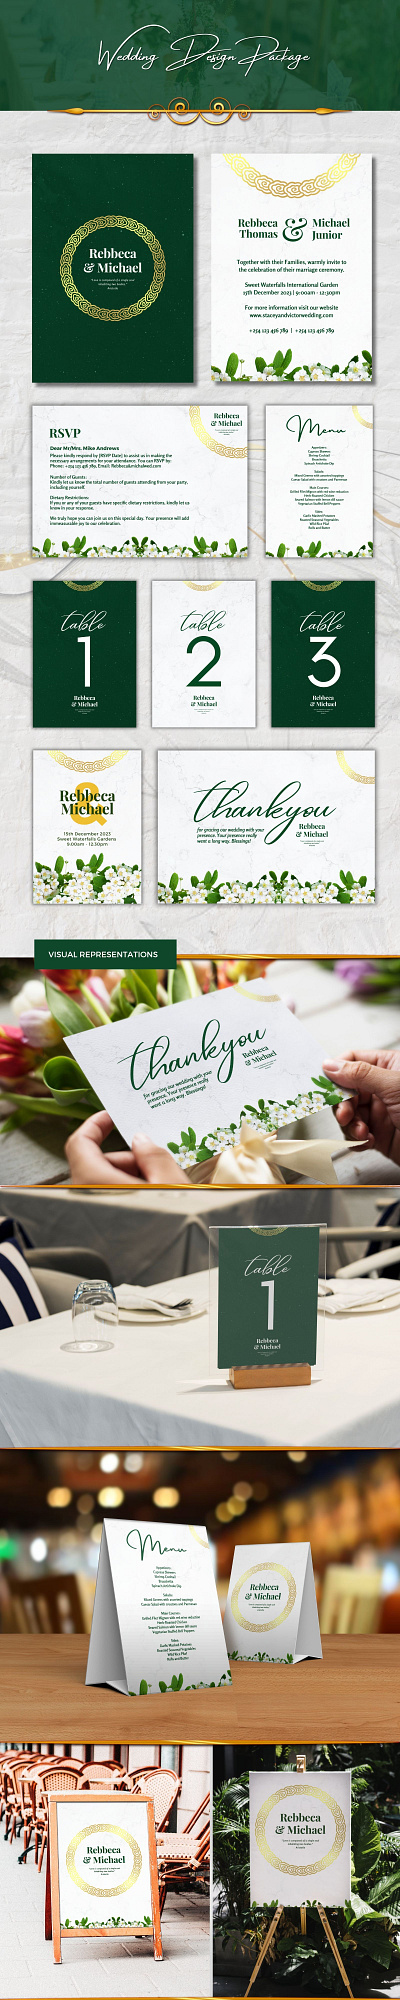 WEDDING DESIGN PACKAGE brand identity graphics design save the date social media flyer design wedding day wedding invitation card wedding photography